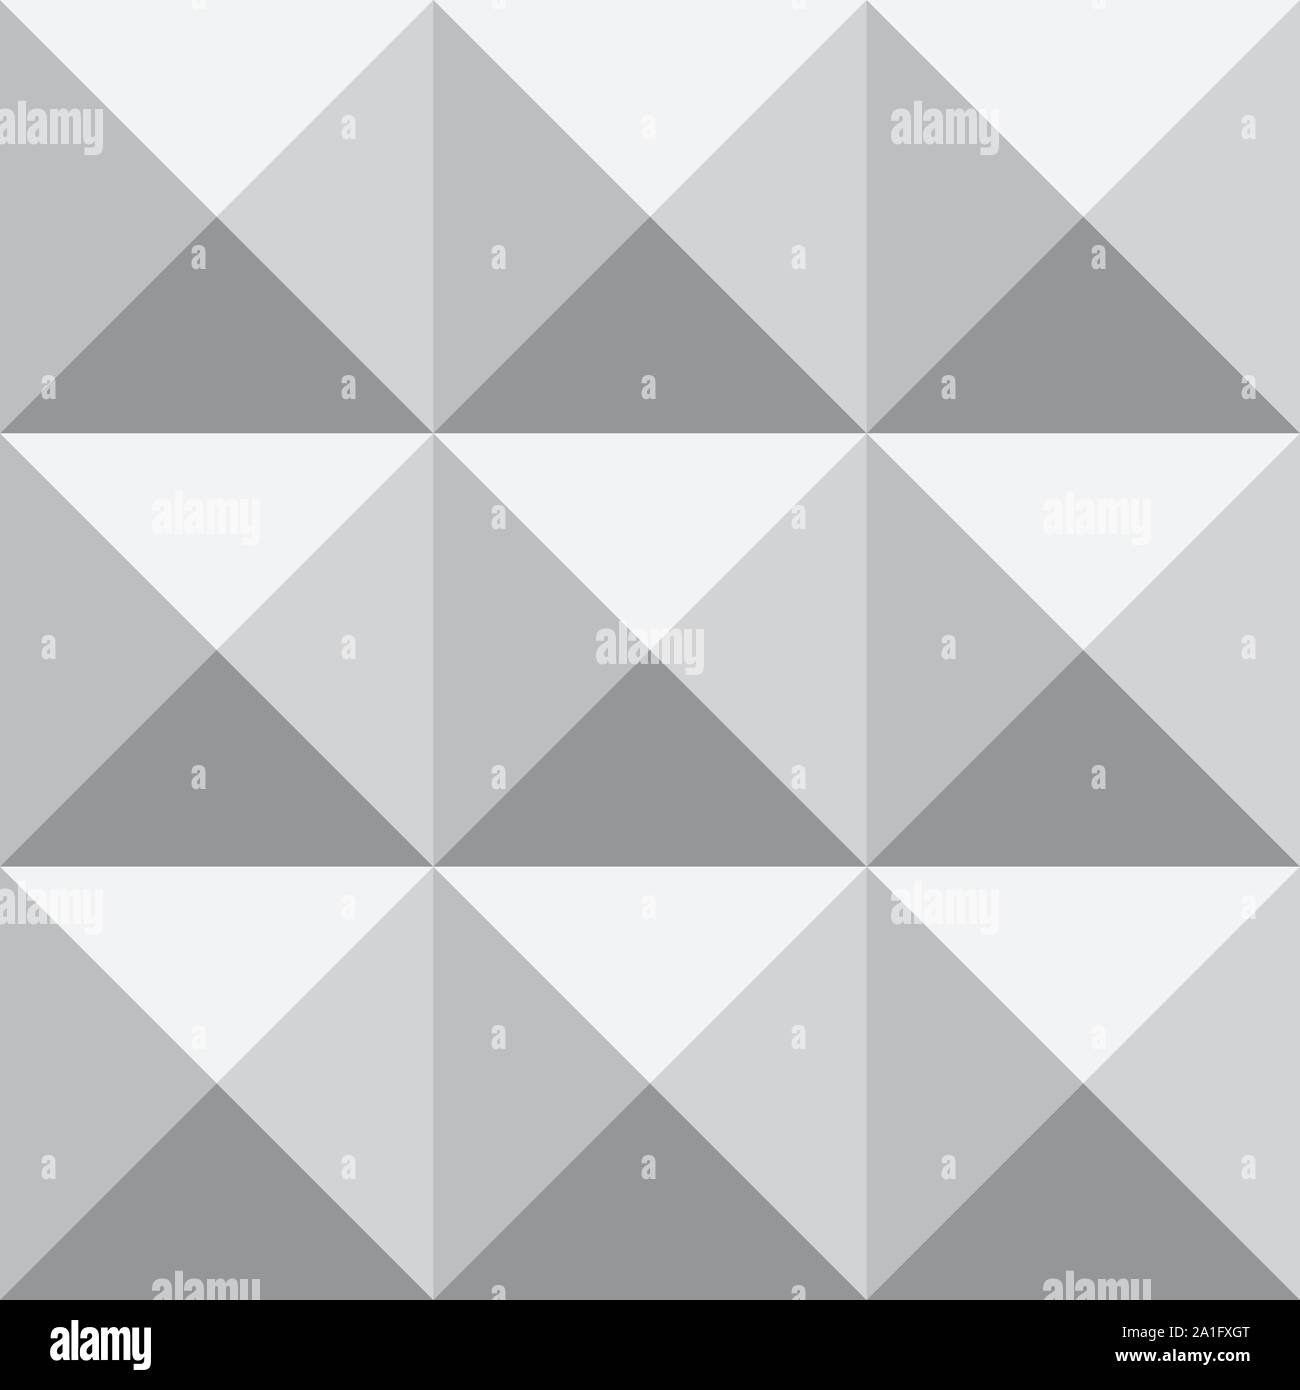 3D Pyramide Würfel Nahtlose, Sich wiederholendes Muster Vector Illustration Stock Vektor